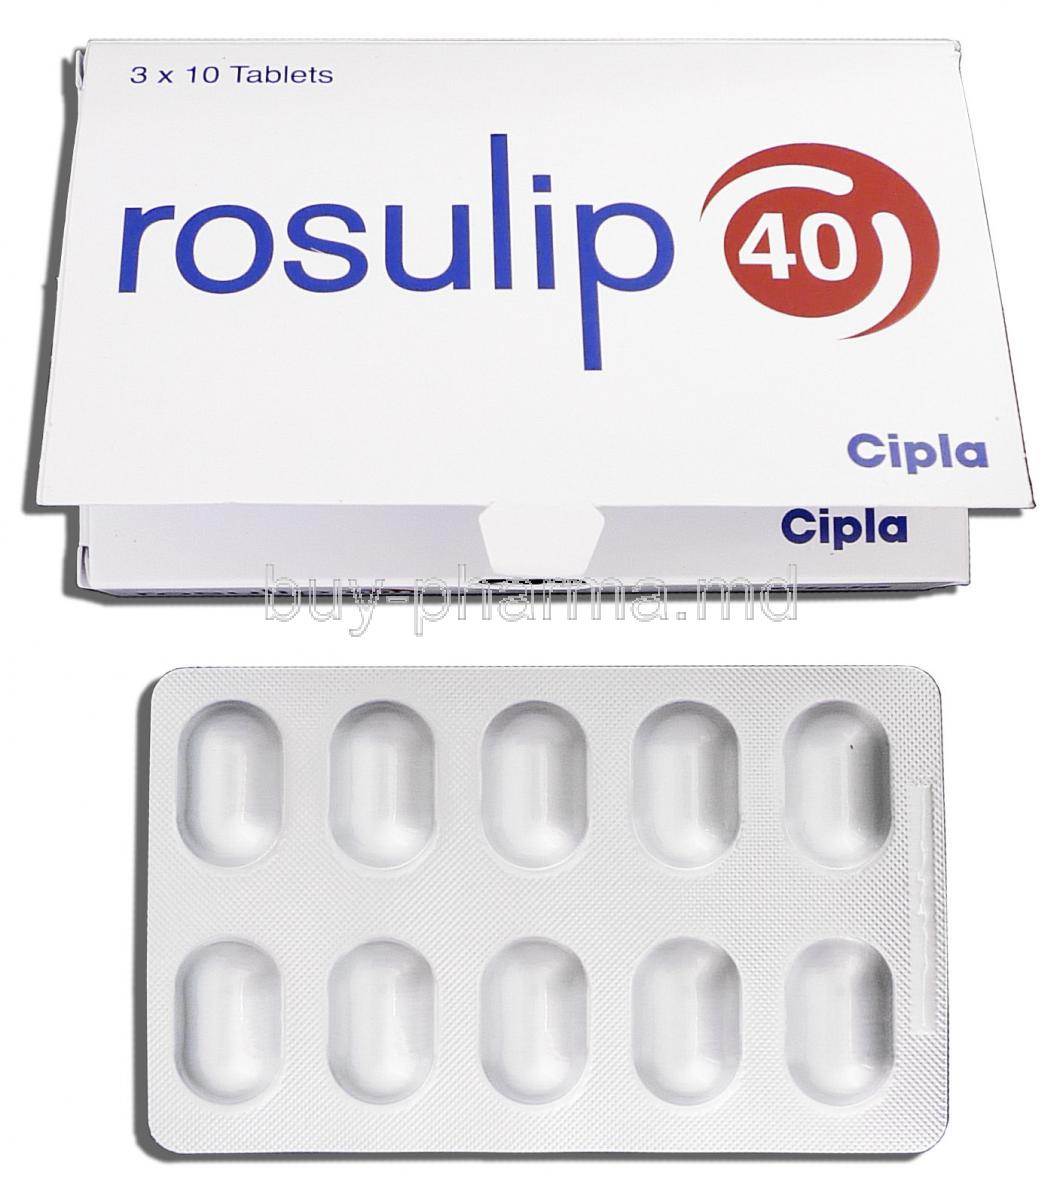 Rosulip 40, Generic Crestor, Rosuvastatin 40mg, Box and Strip